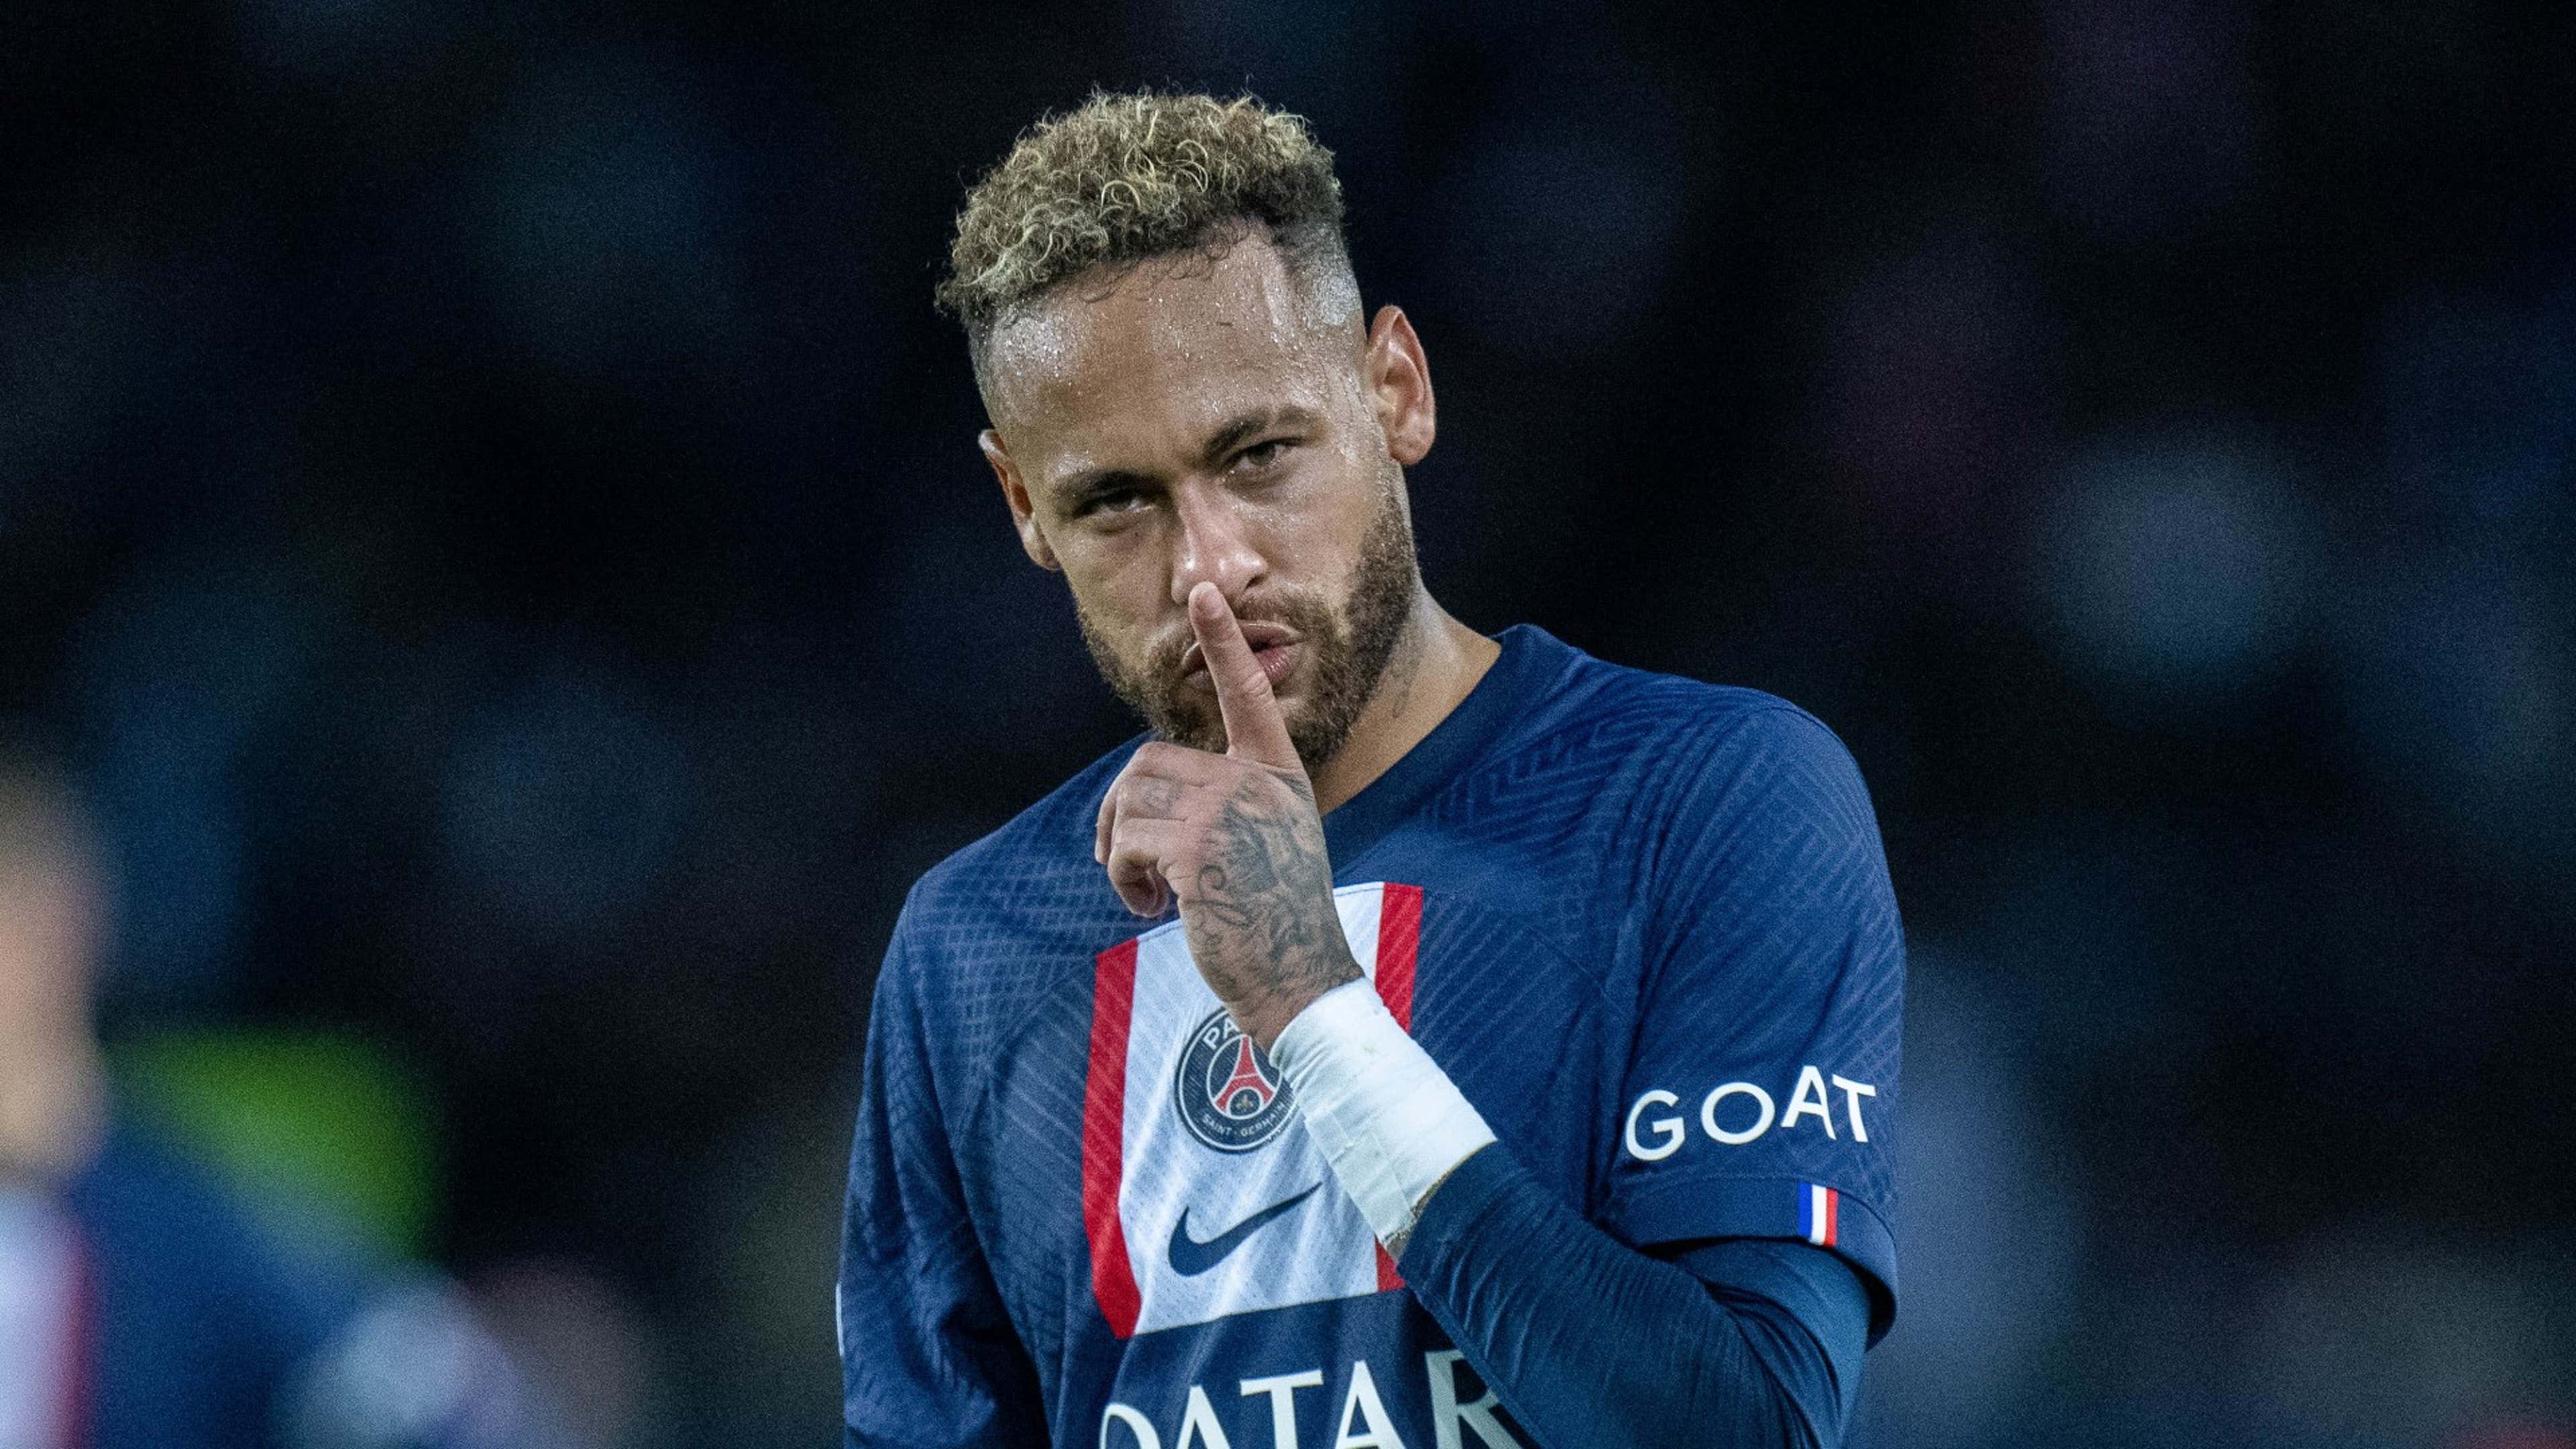 Neymar Jr in 2022: 23 - Brazil ; The Home Of Legends